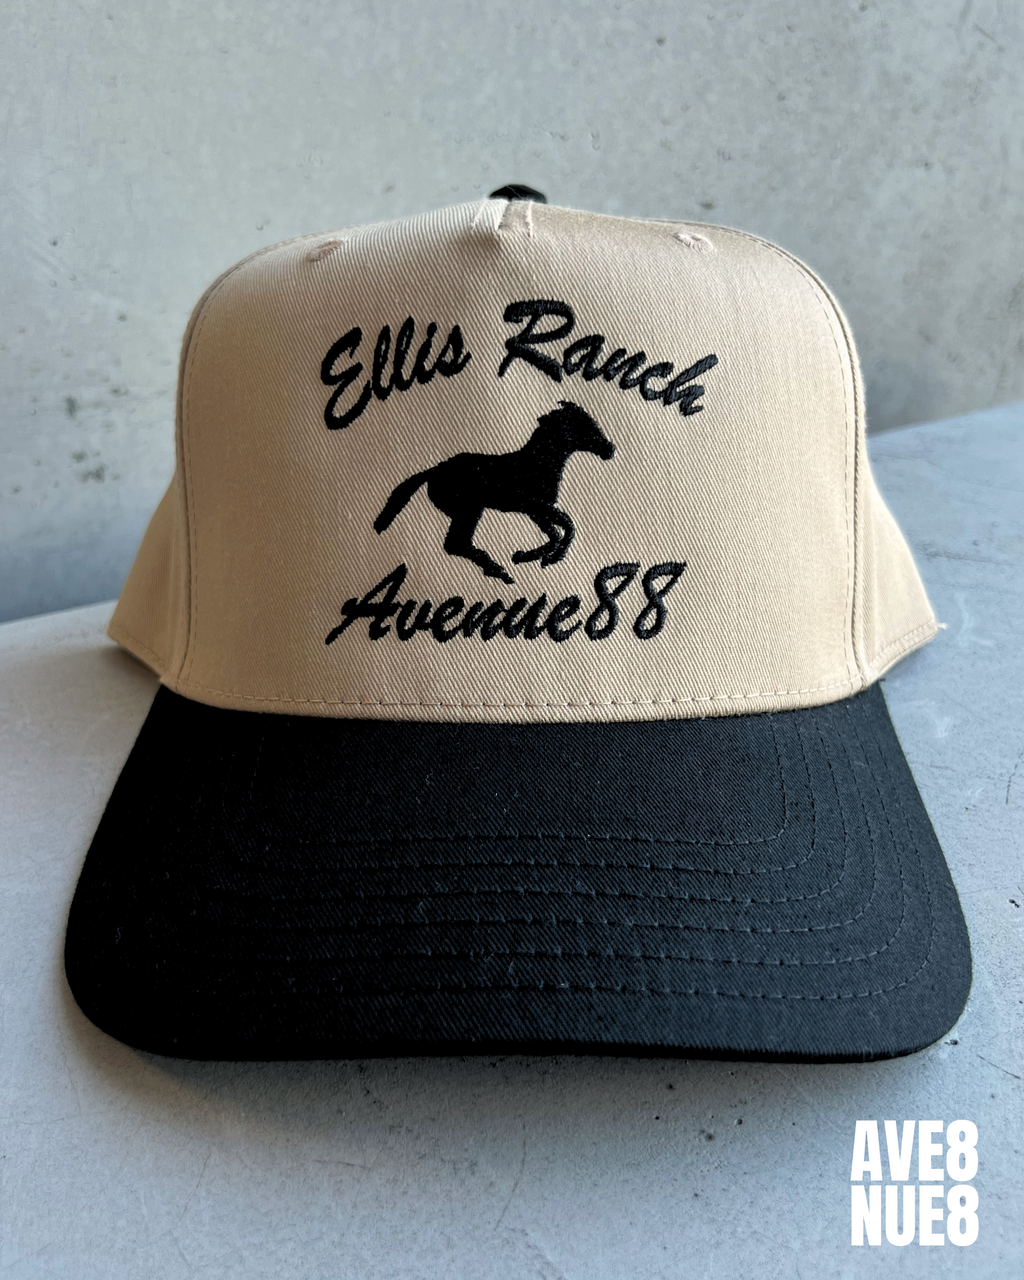 Khaki/Black Ellis ranch hat